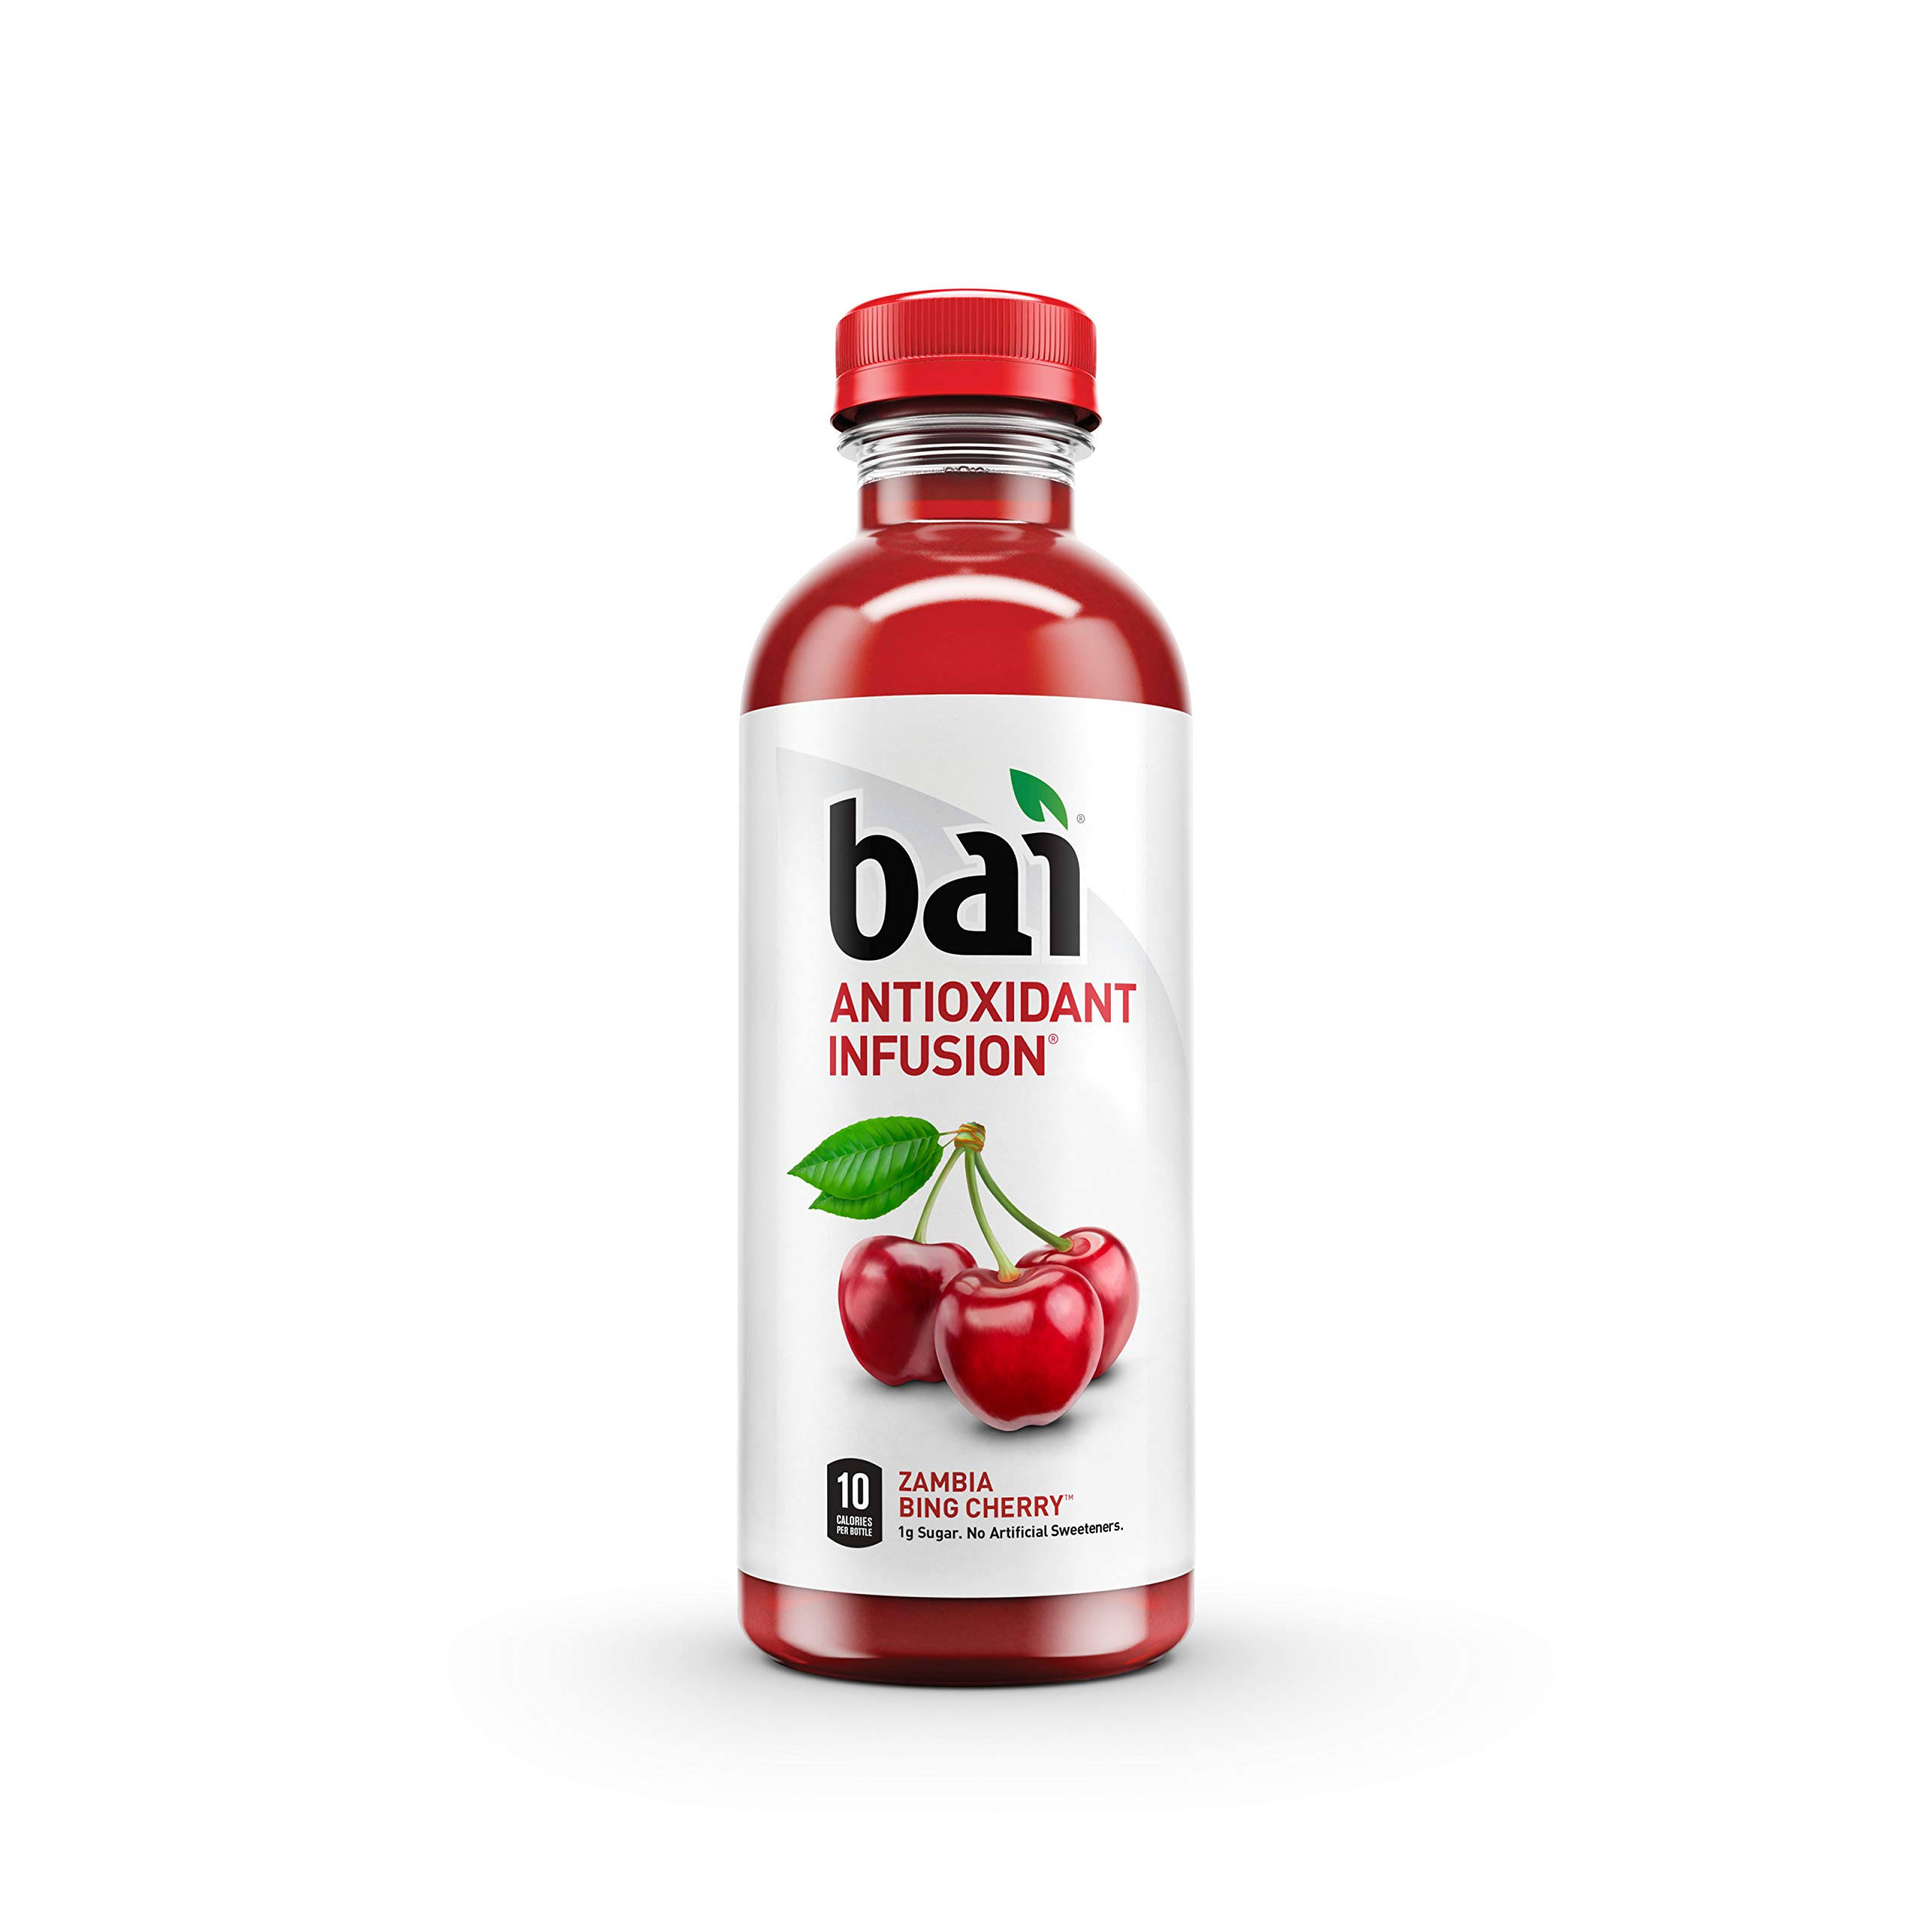 Bai Antioxidant Infusion Beverage, Zambia Bing Cherry - 18 fl oz